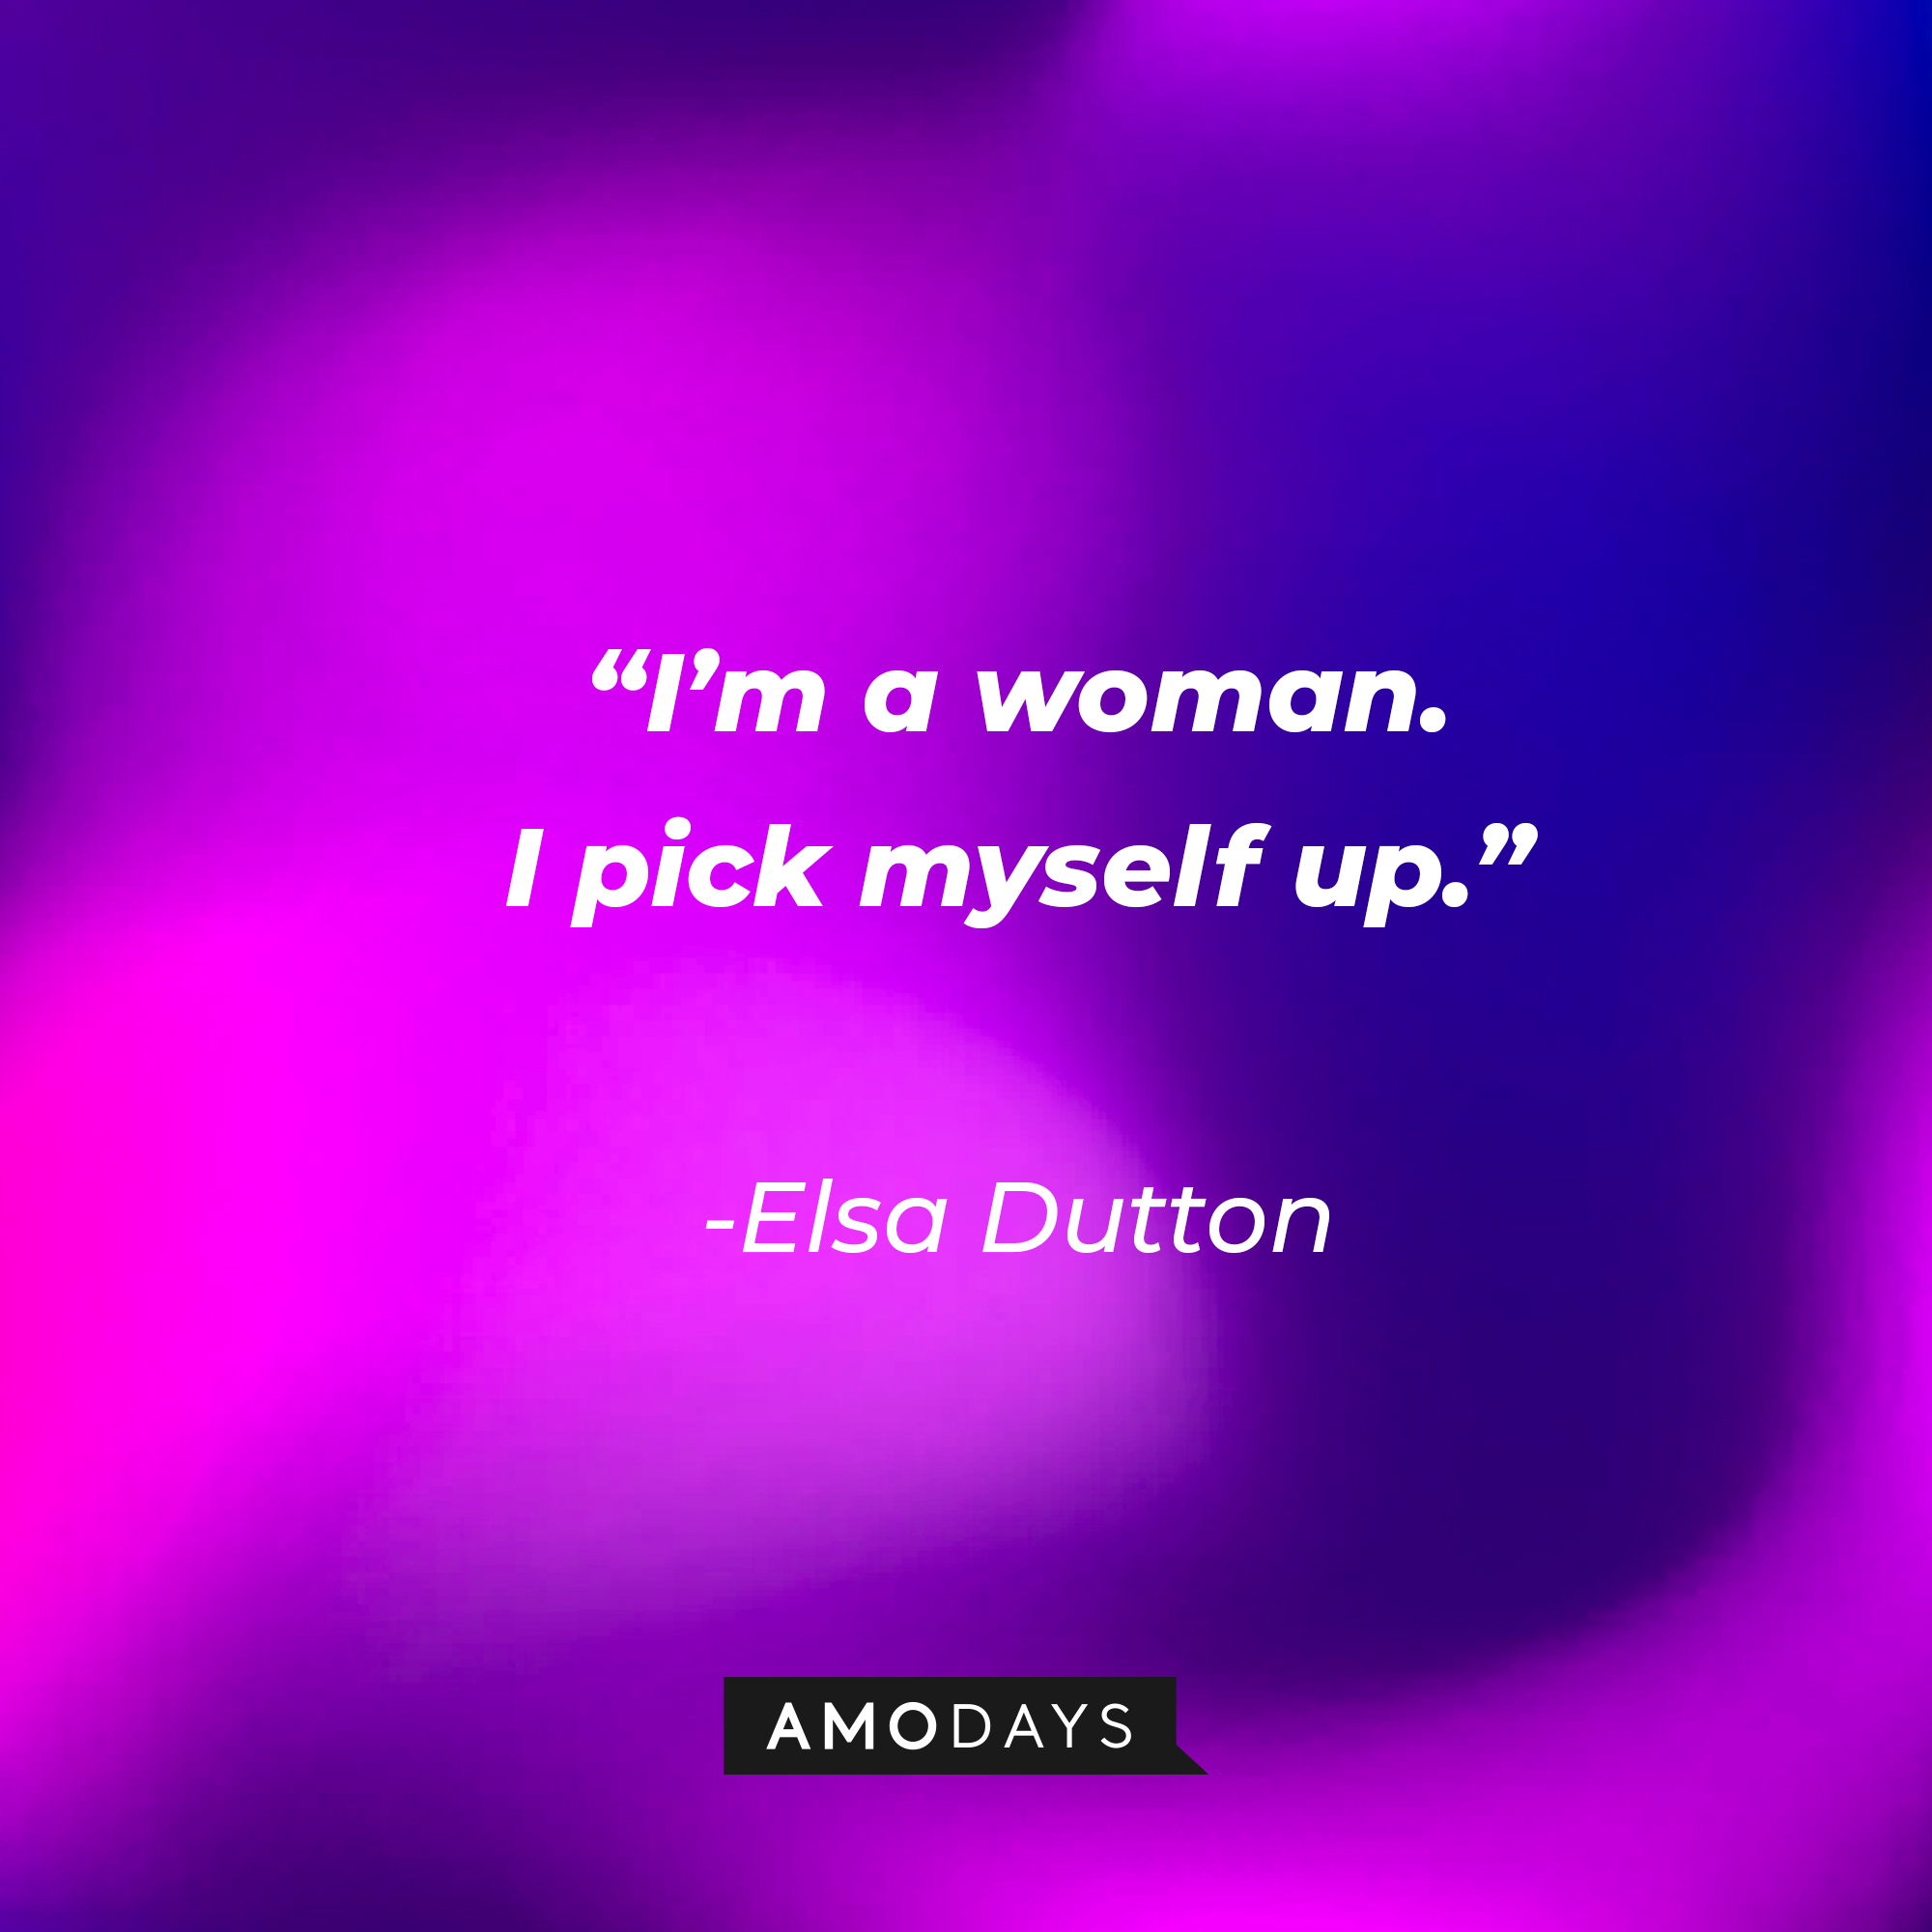 Elsa Dutton’s quote: “I’m a woman. I pick myself up.”  | Source: AmoDays